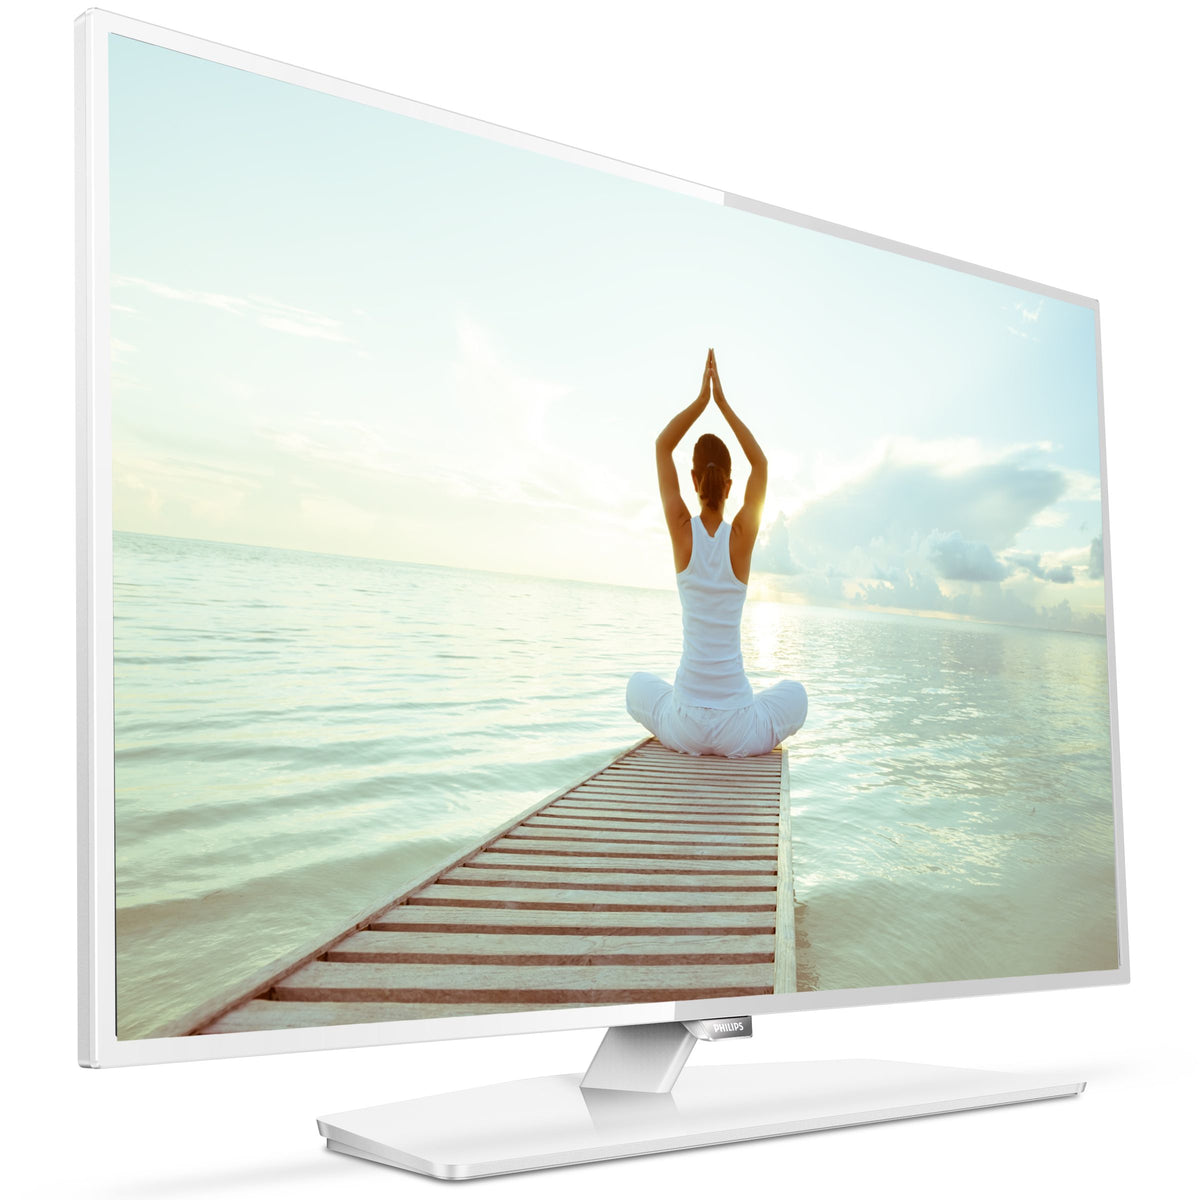 Philips 32HFL3011W - 32" Classe Diagonal EasySuite TV LCD com luz de fundo LED - hotel / hospitalidade - 720p 1366 x 768 - branco